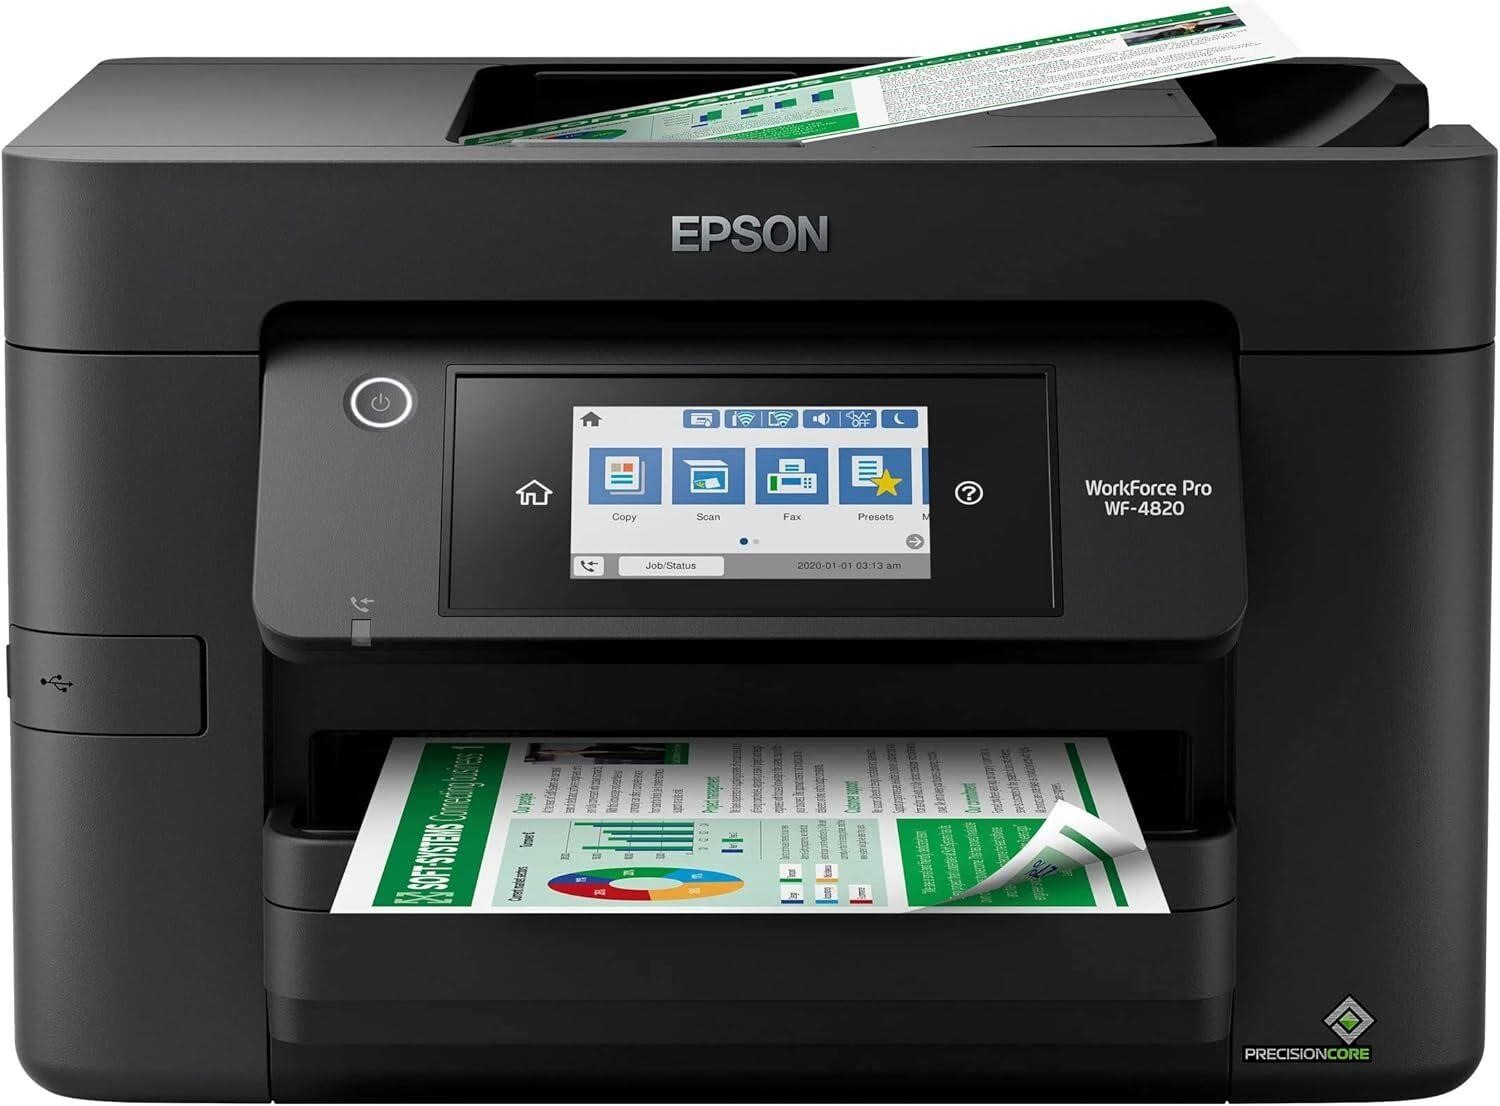 $89  Epson Workforce Pro WF-4834 All in One Printe